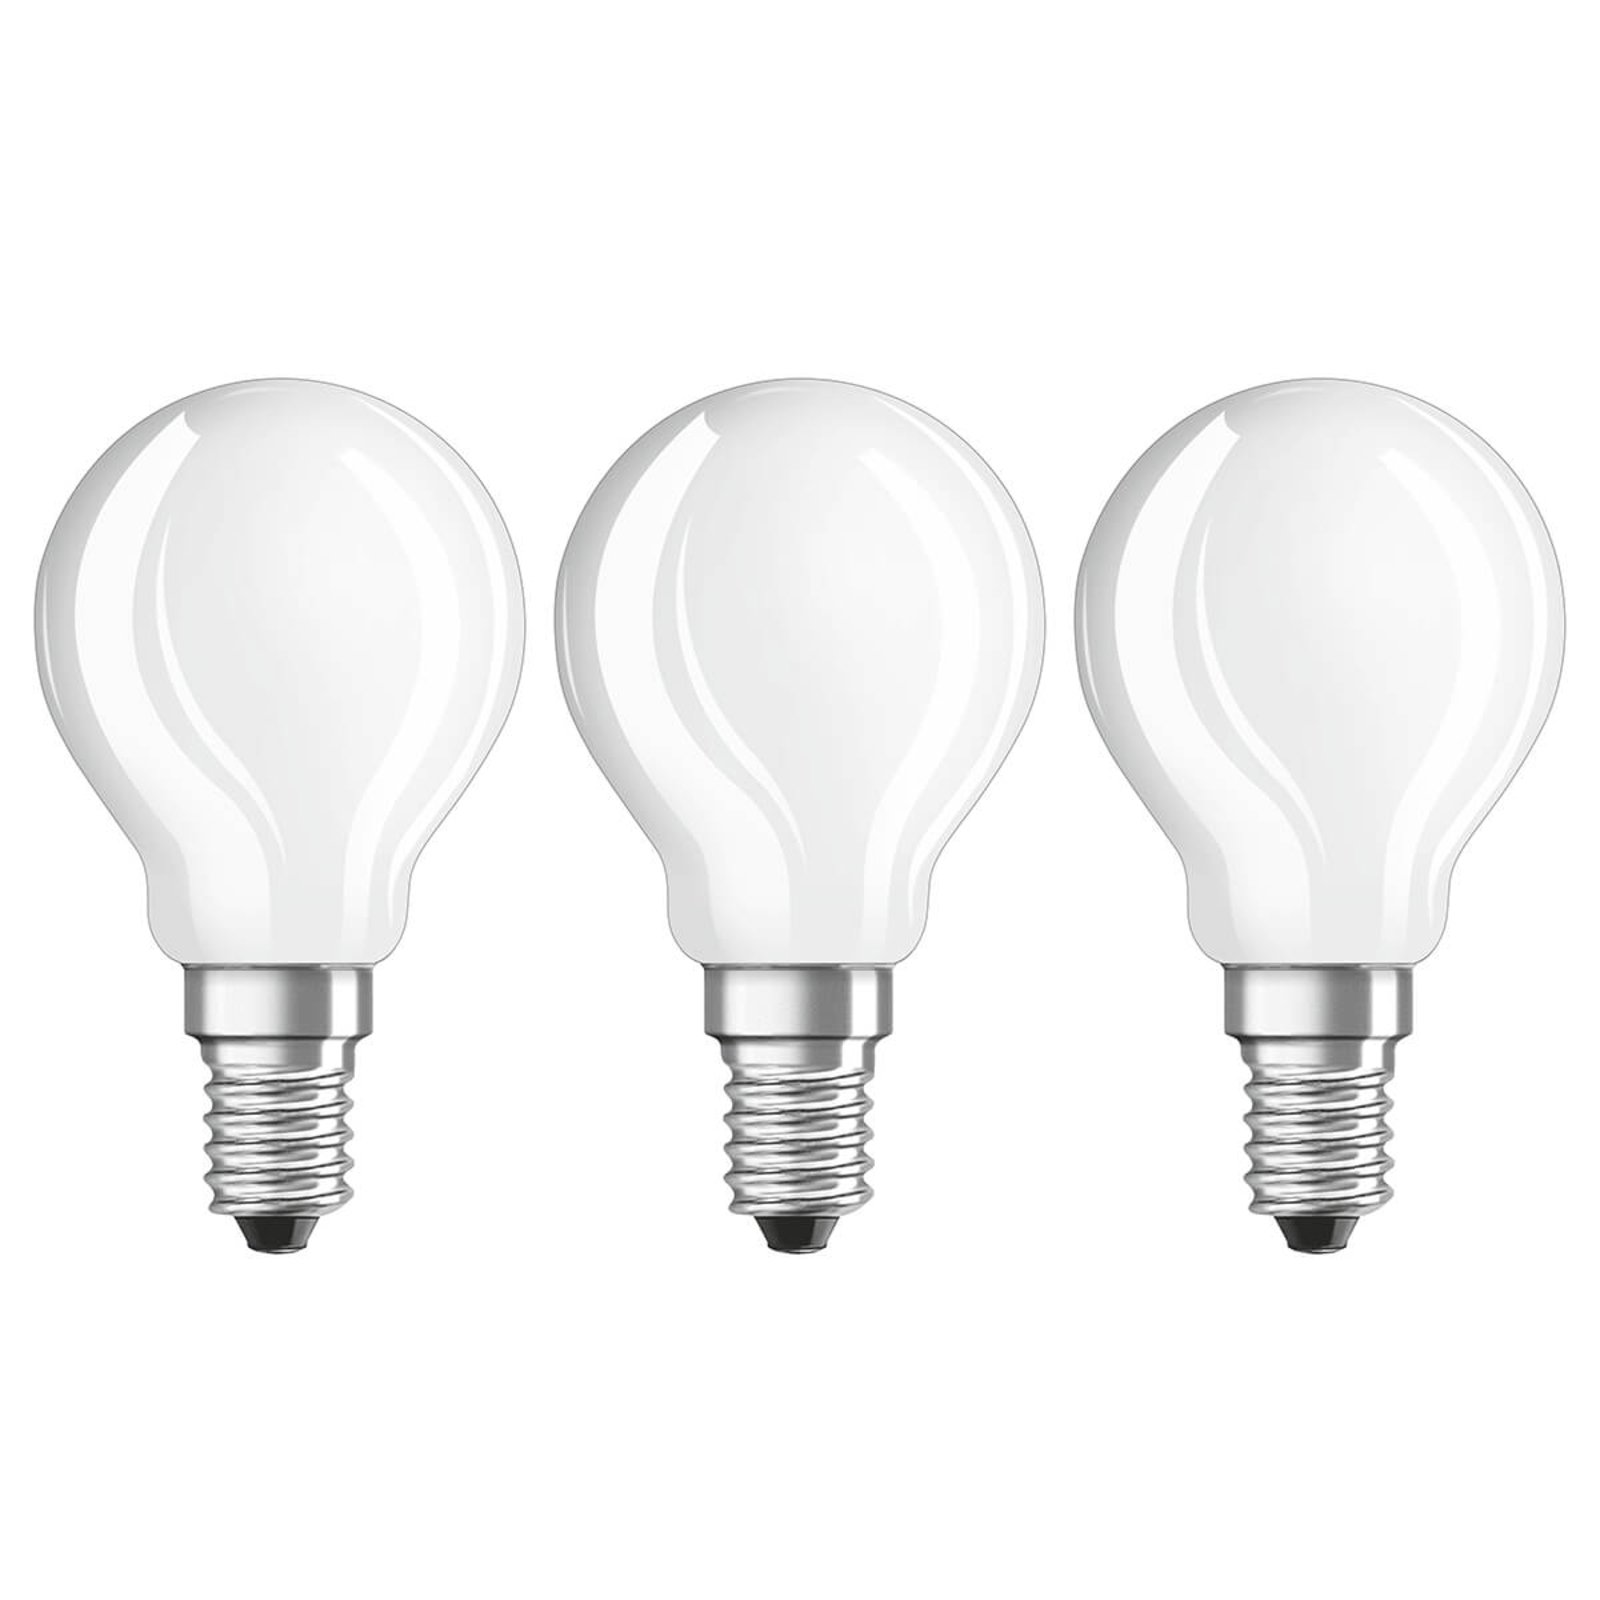 LED-lamp E14 4W, soe valge, 470 luumenit, 3 tk komplektis